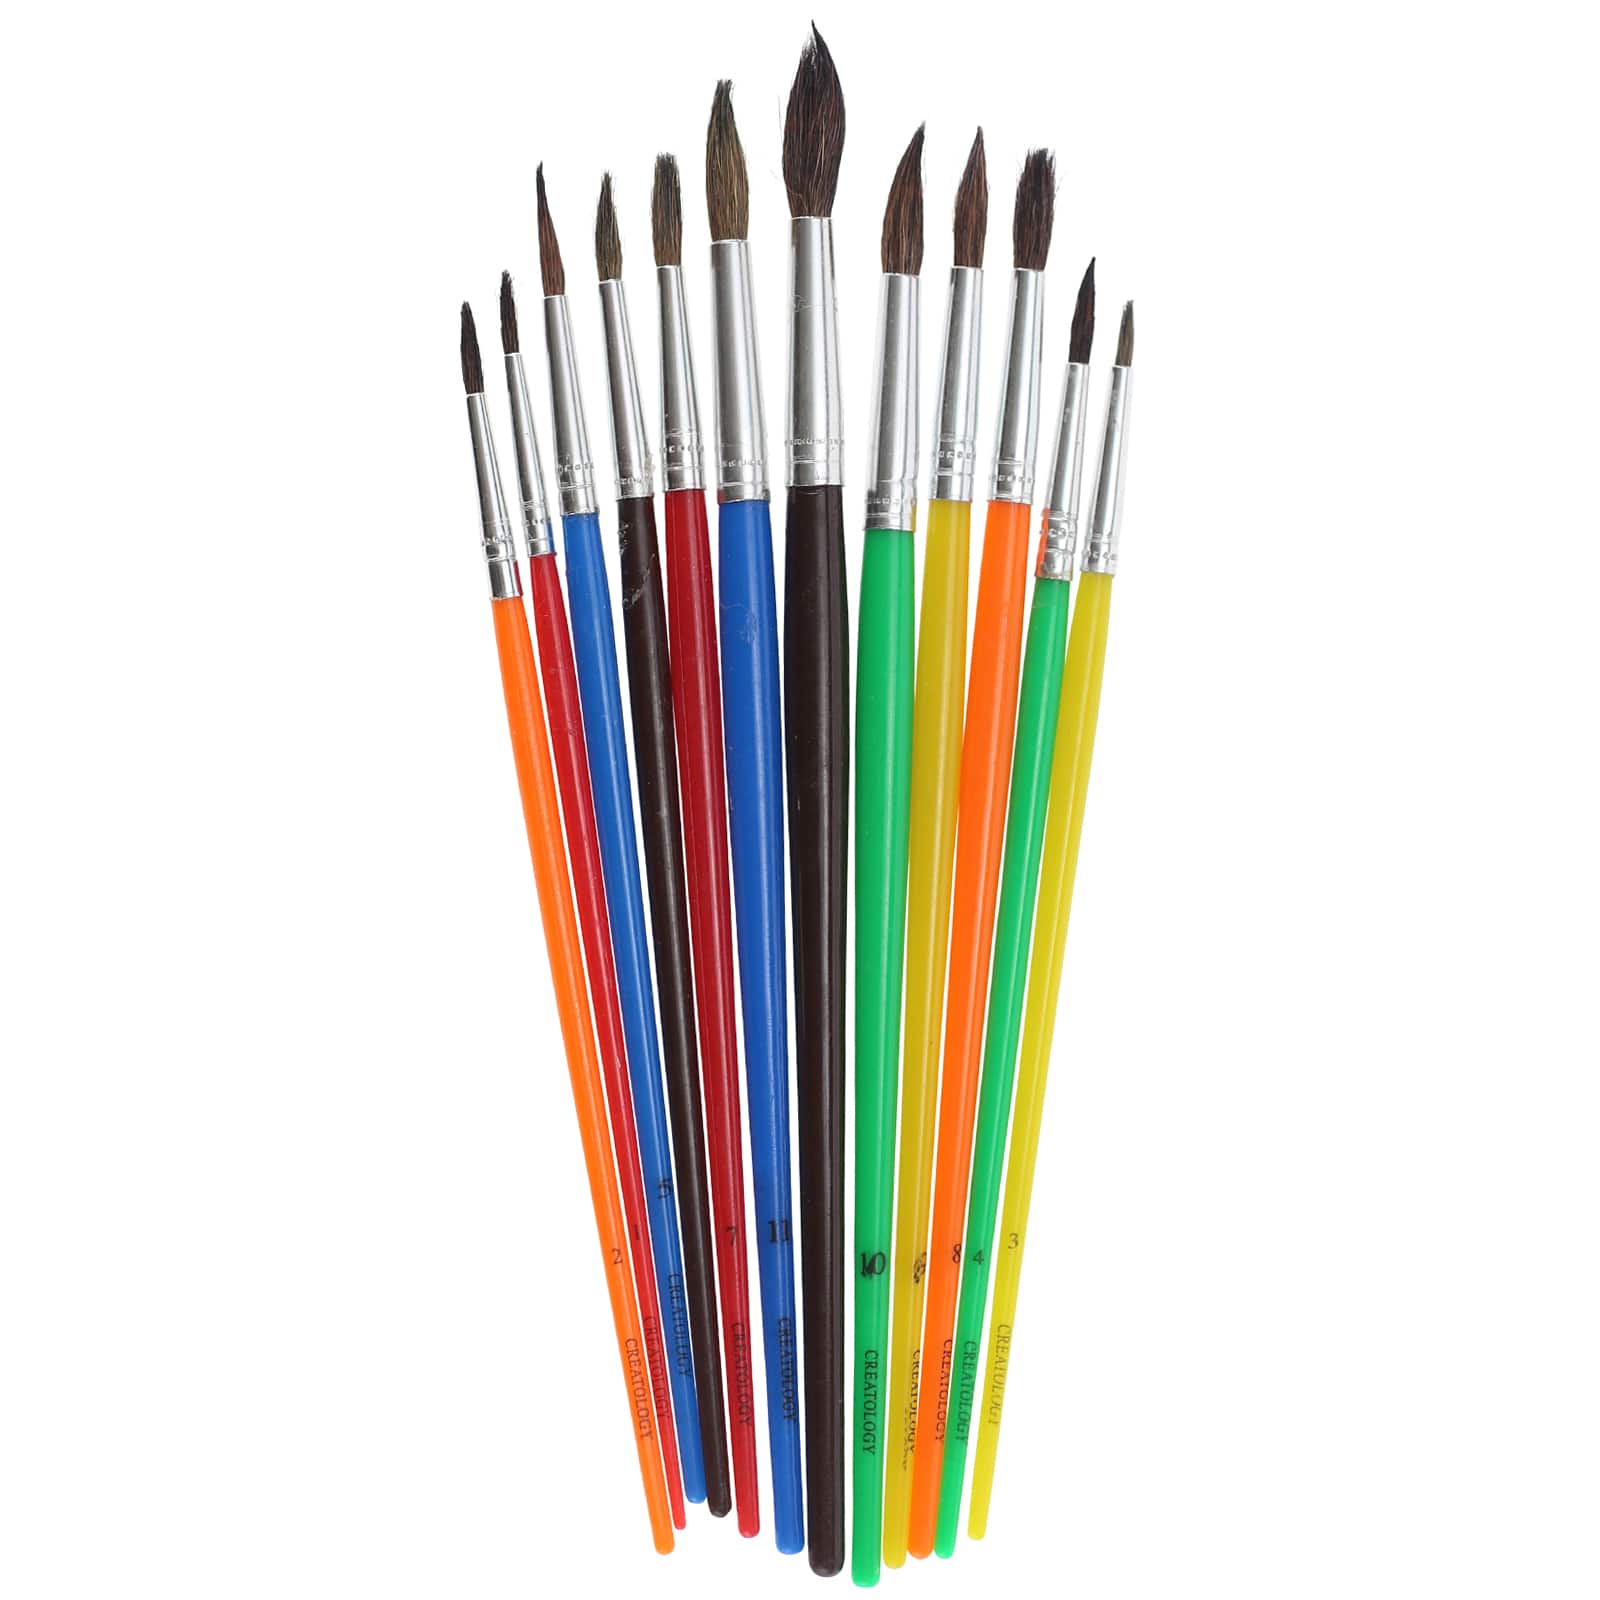 Artbox Artist Natural Bristle Brush Pack of 12 Premium Quality Art Craft 